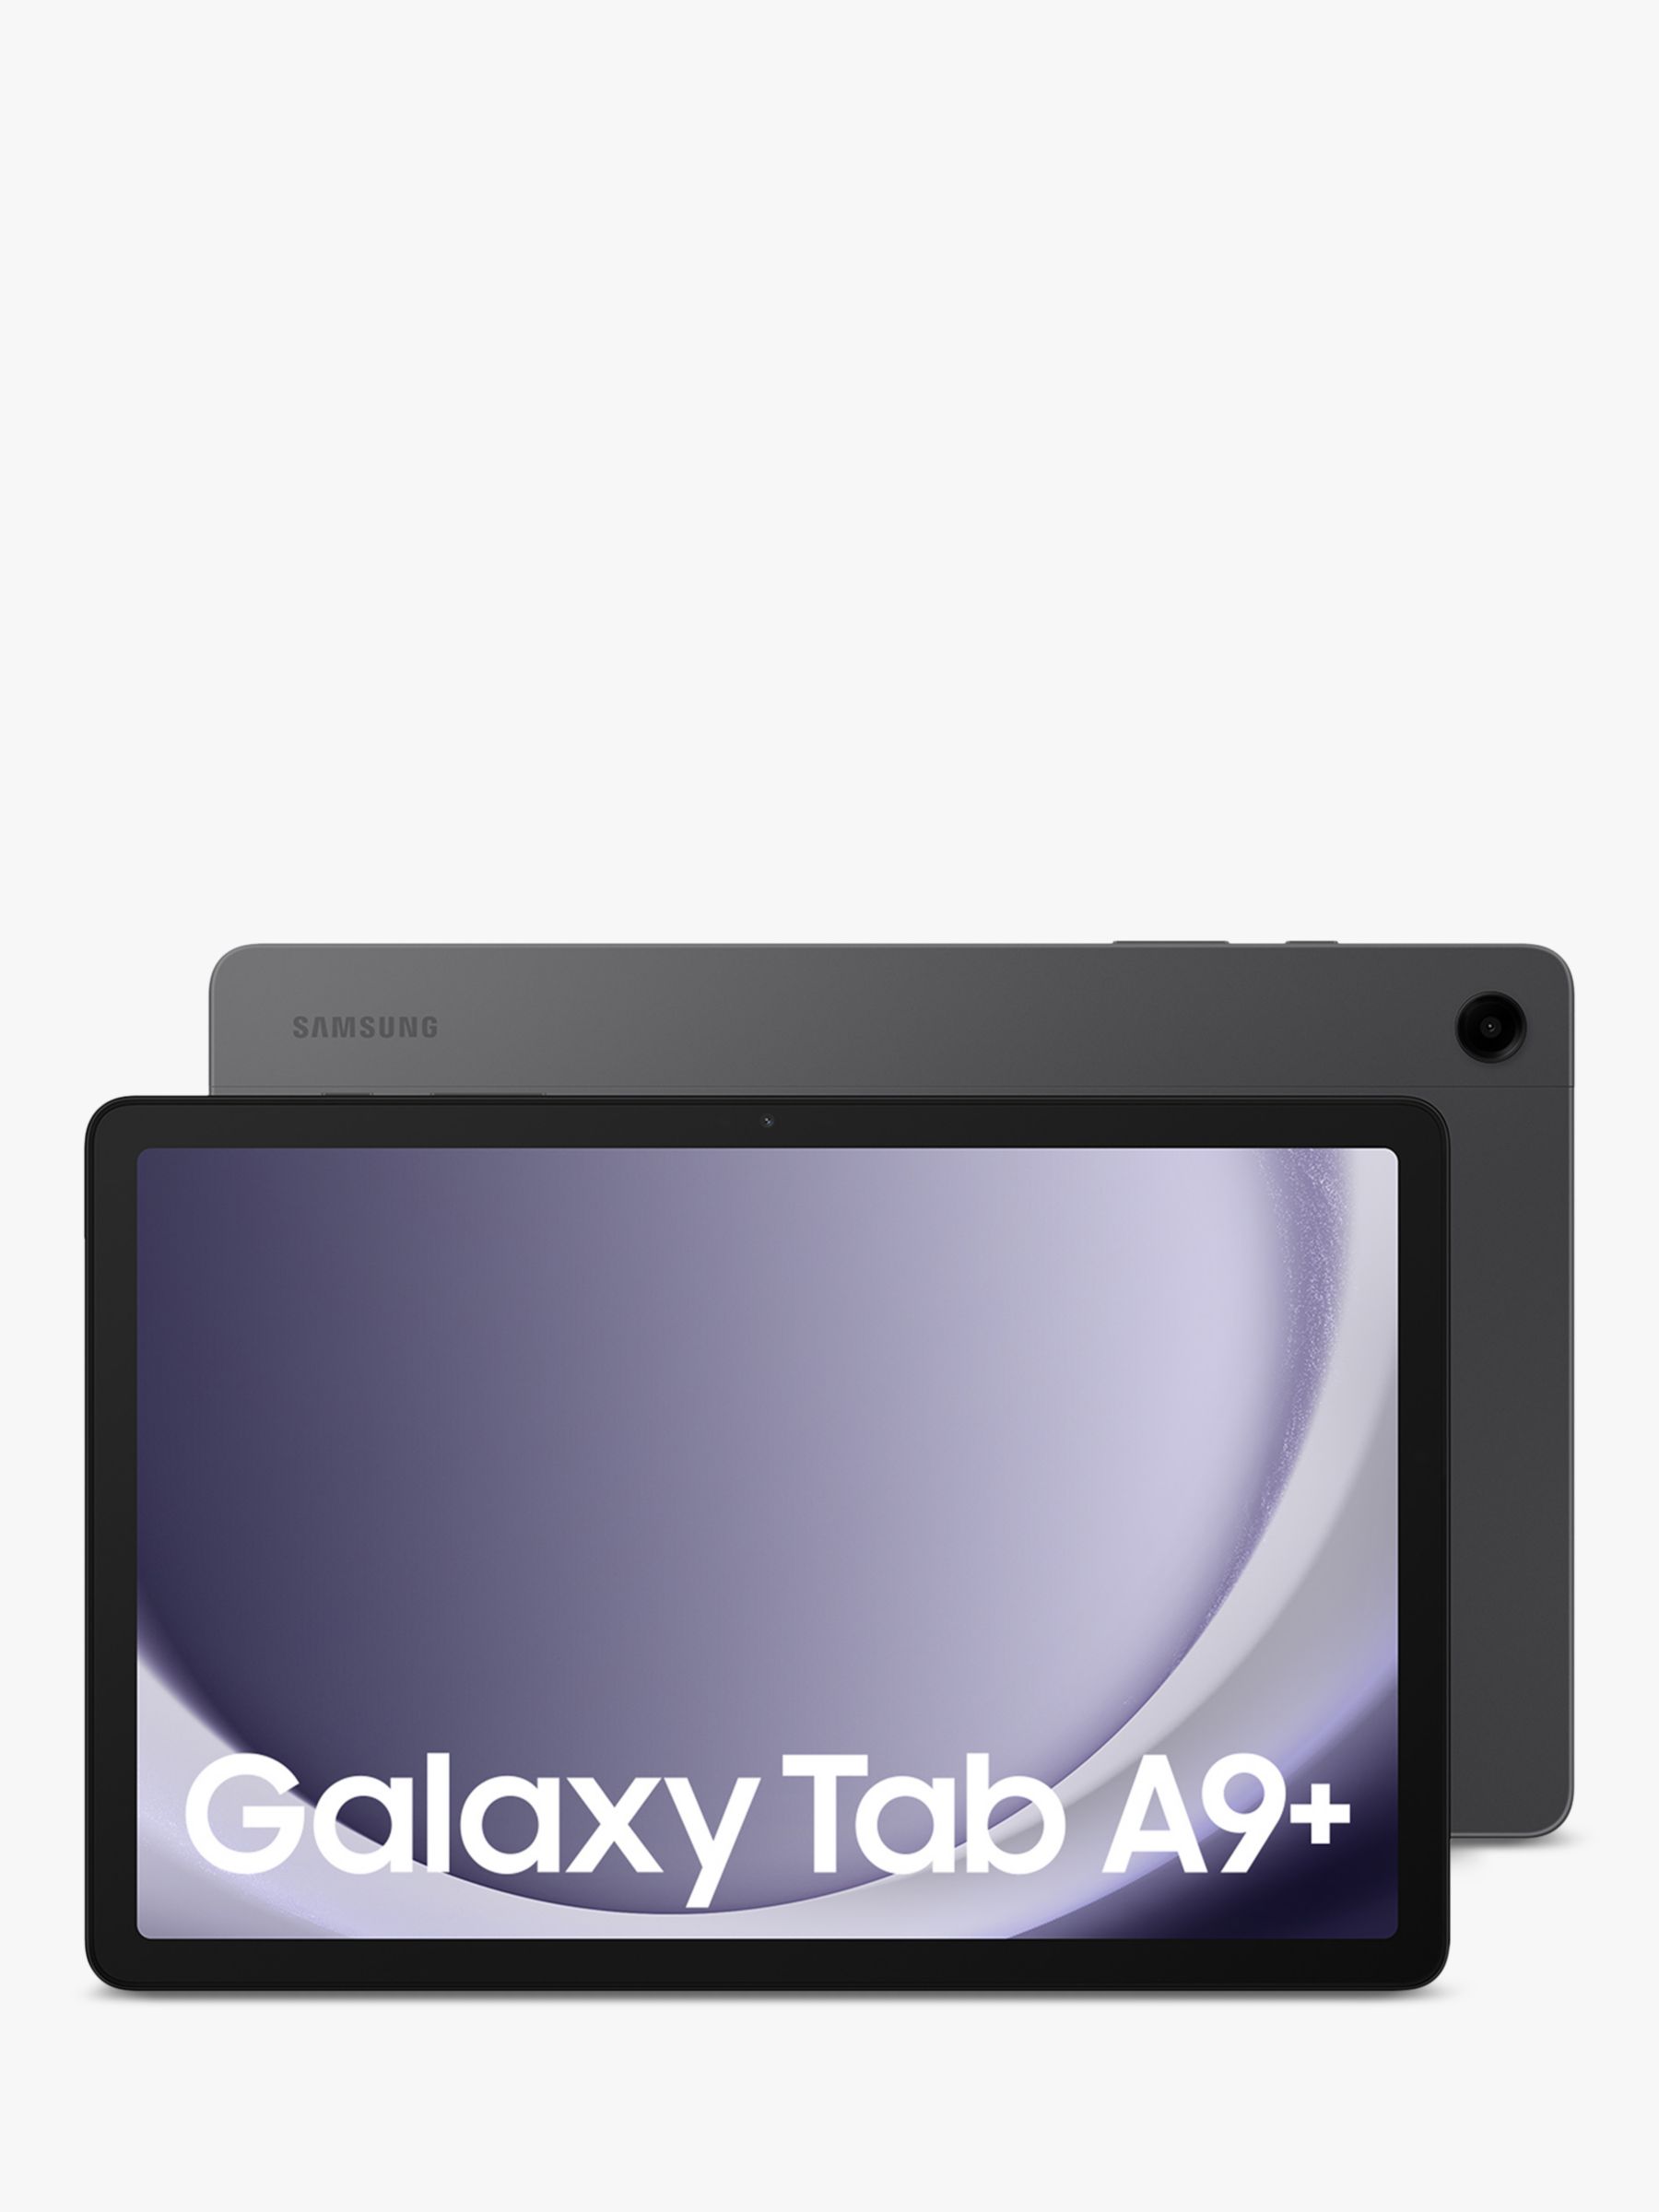 sims 4 on tablet download origin｜TikTok Search